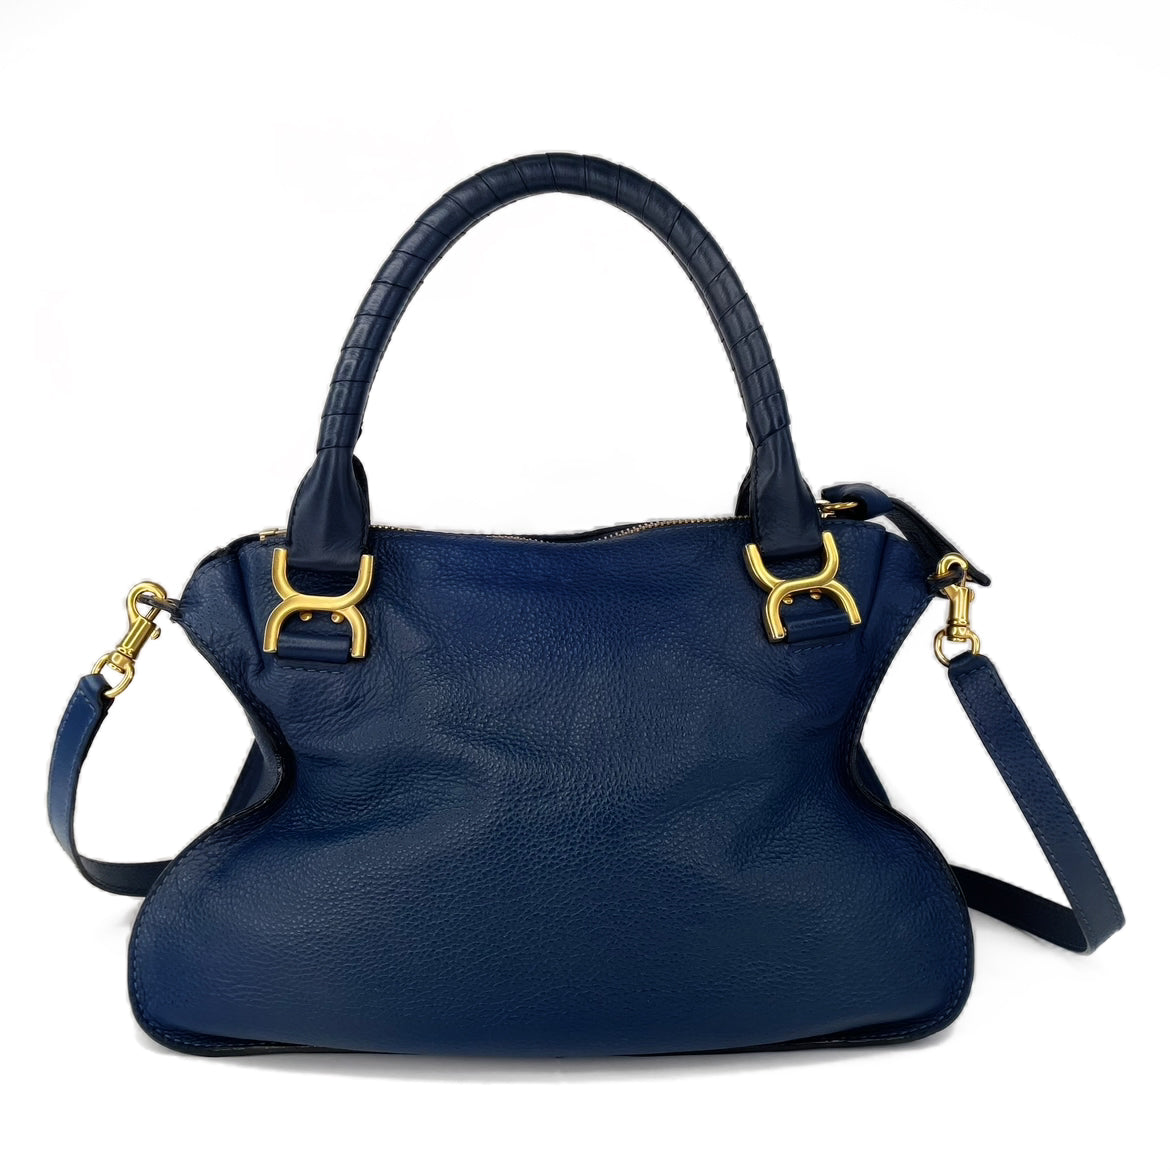 Chloe Marcie Blue Bag